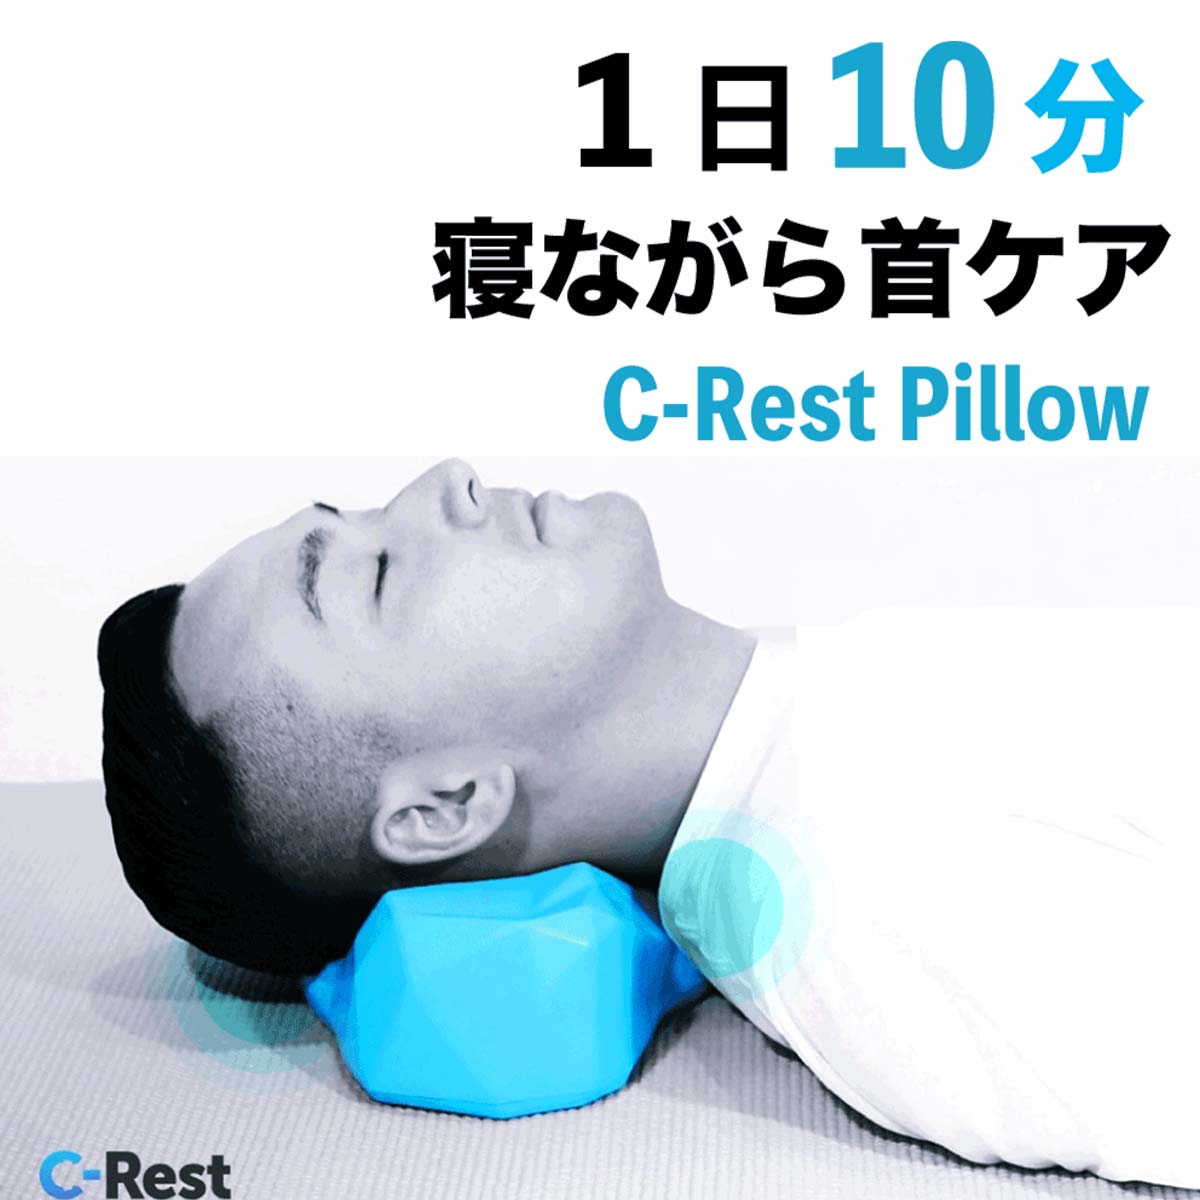 C-Rest Pillow(シーレストピロー)